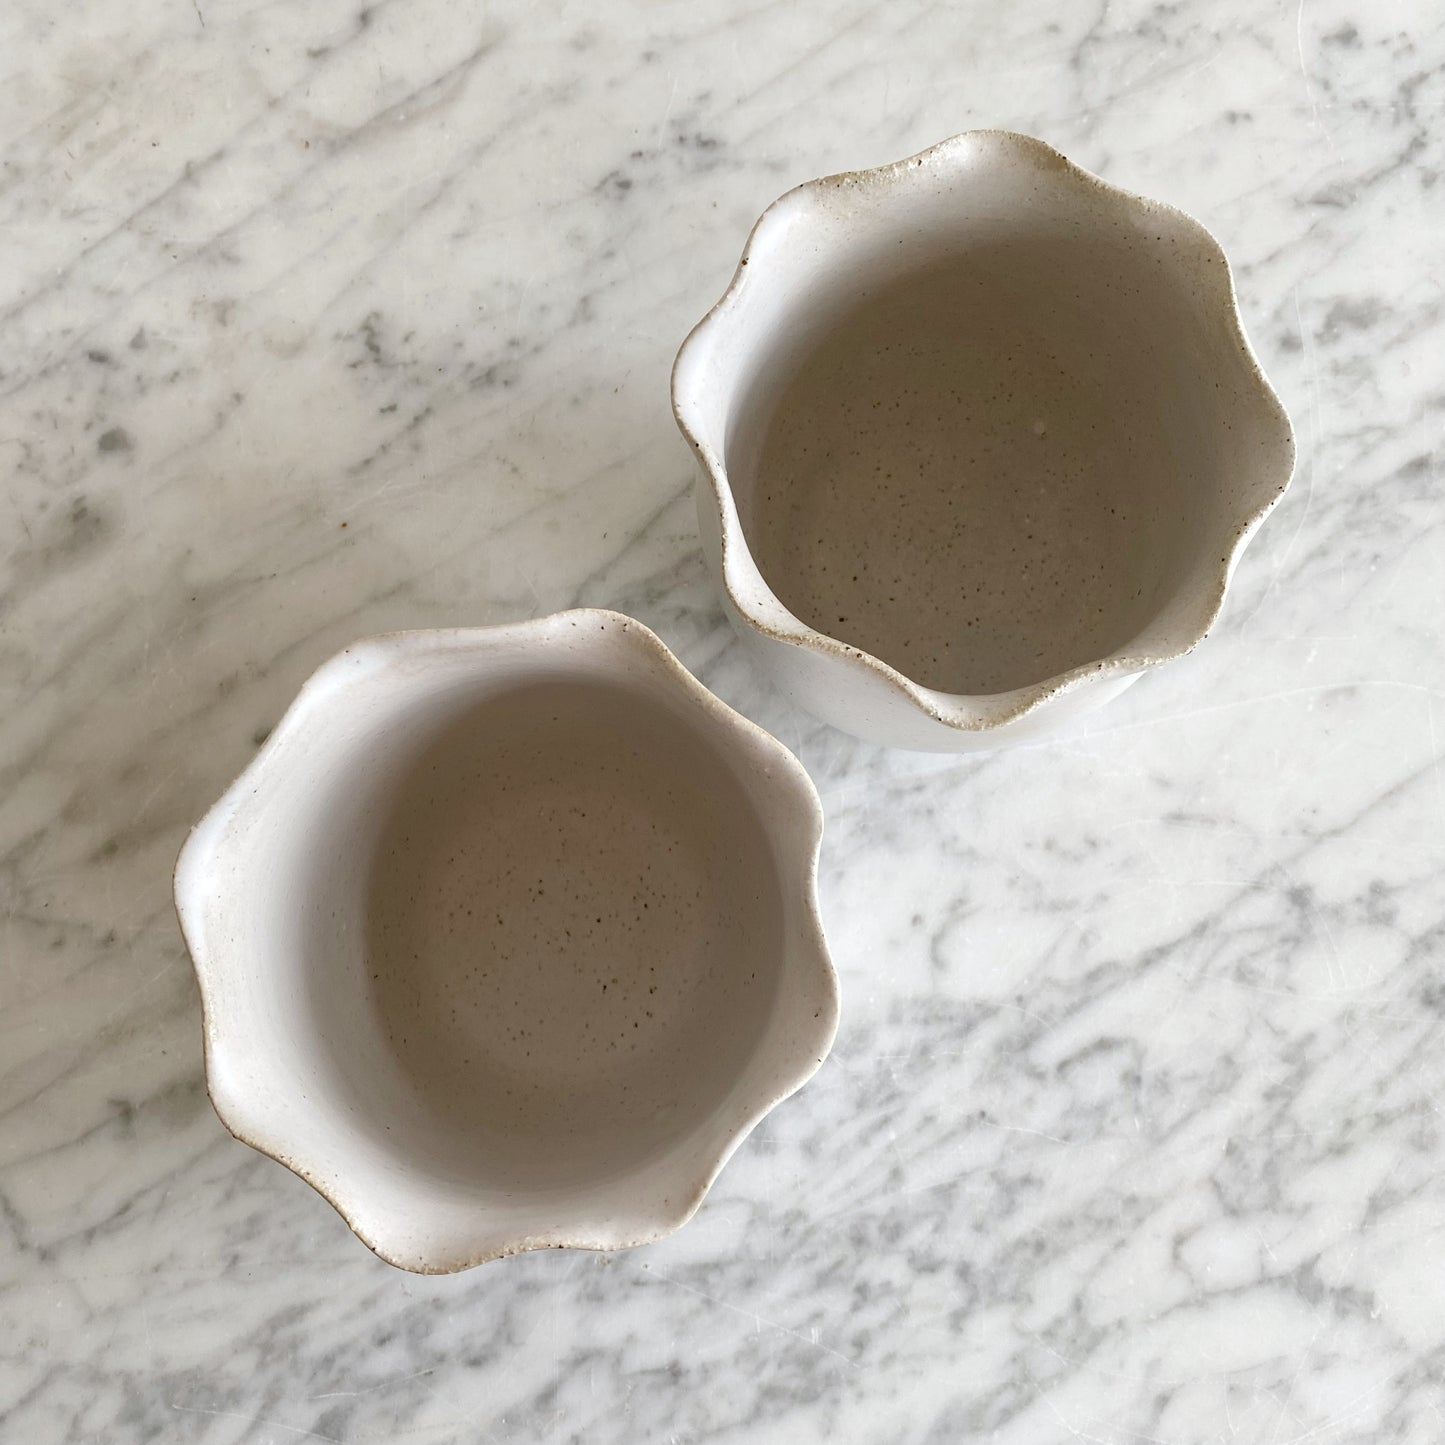 Samuel Clay Ceramics: Wavy Vase